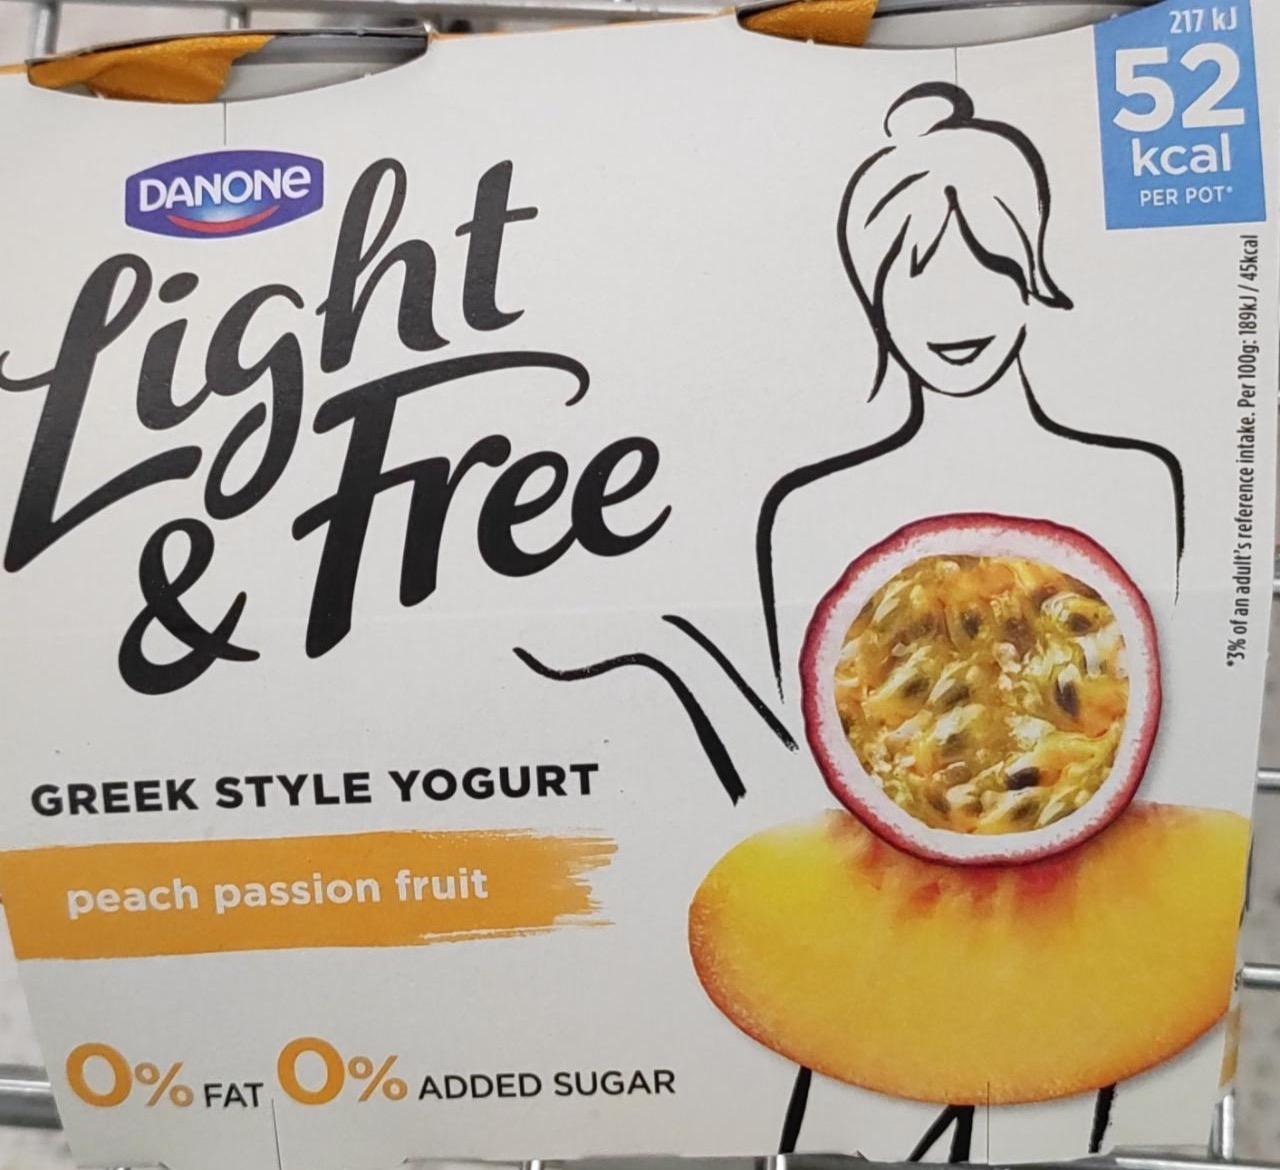 Képek - Light & Free Greek style yogurt Peach passion fruit Danone